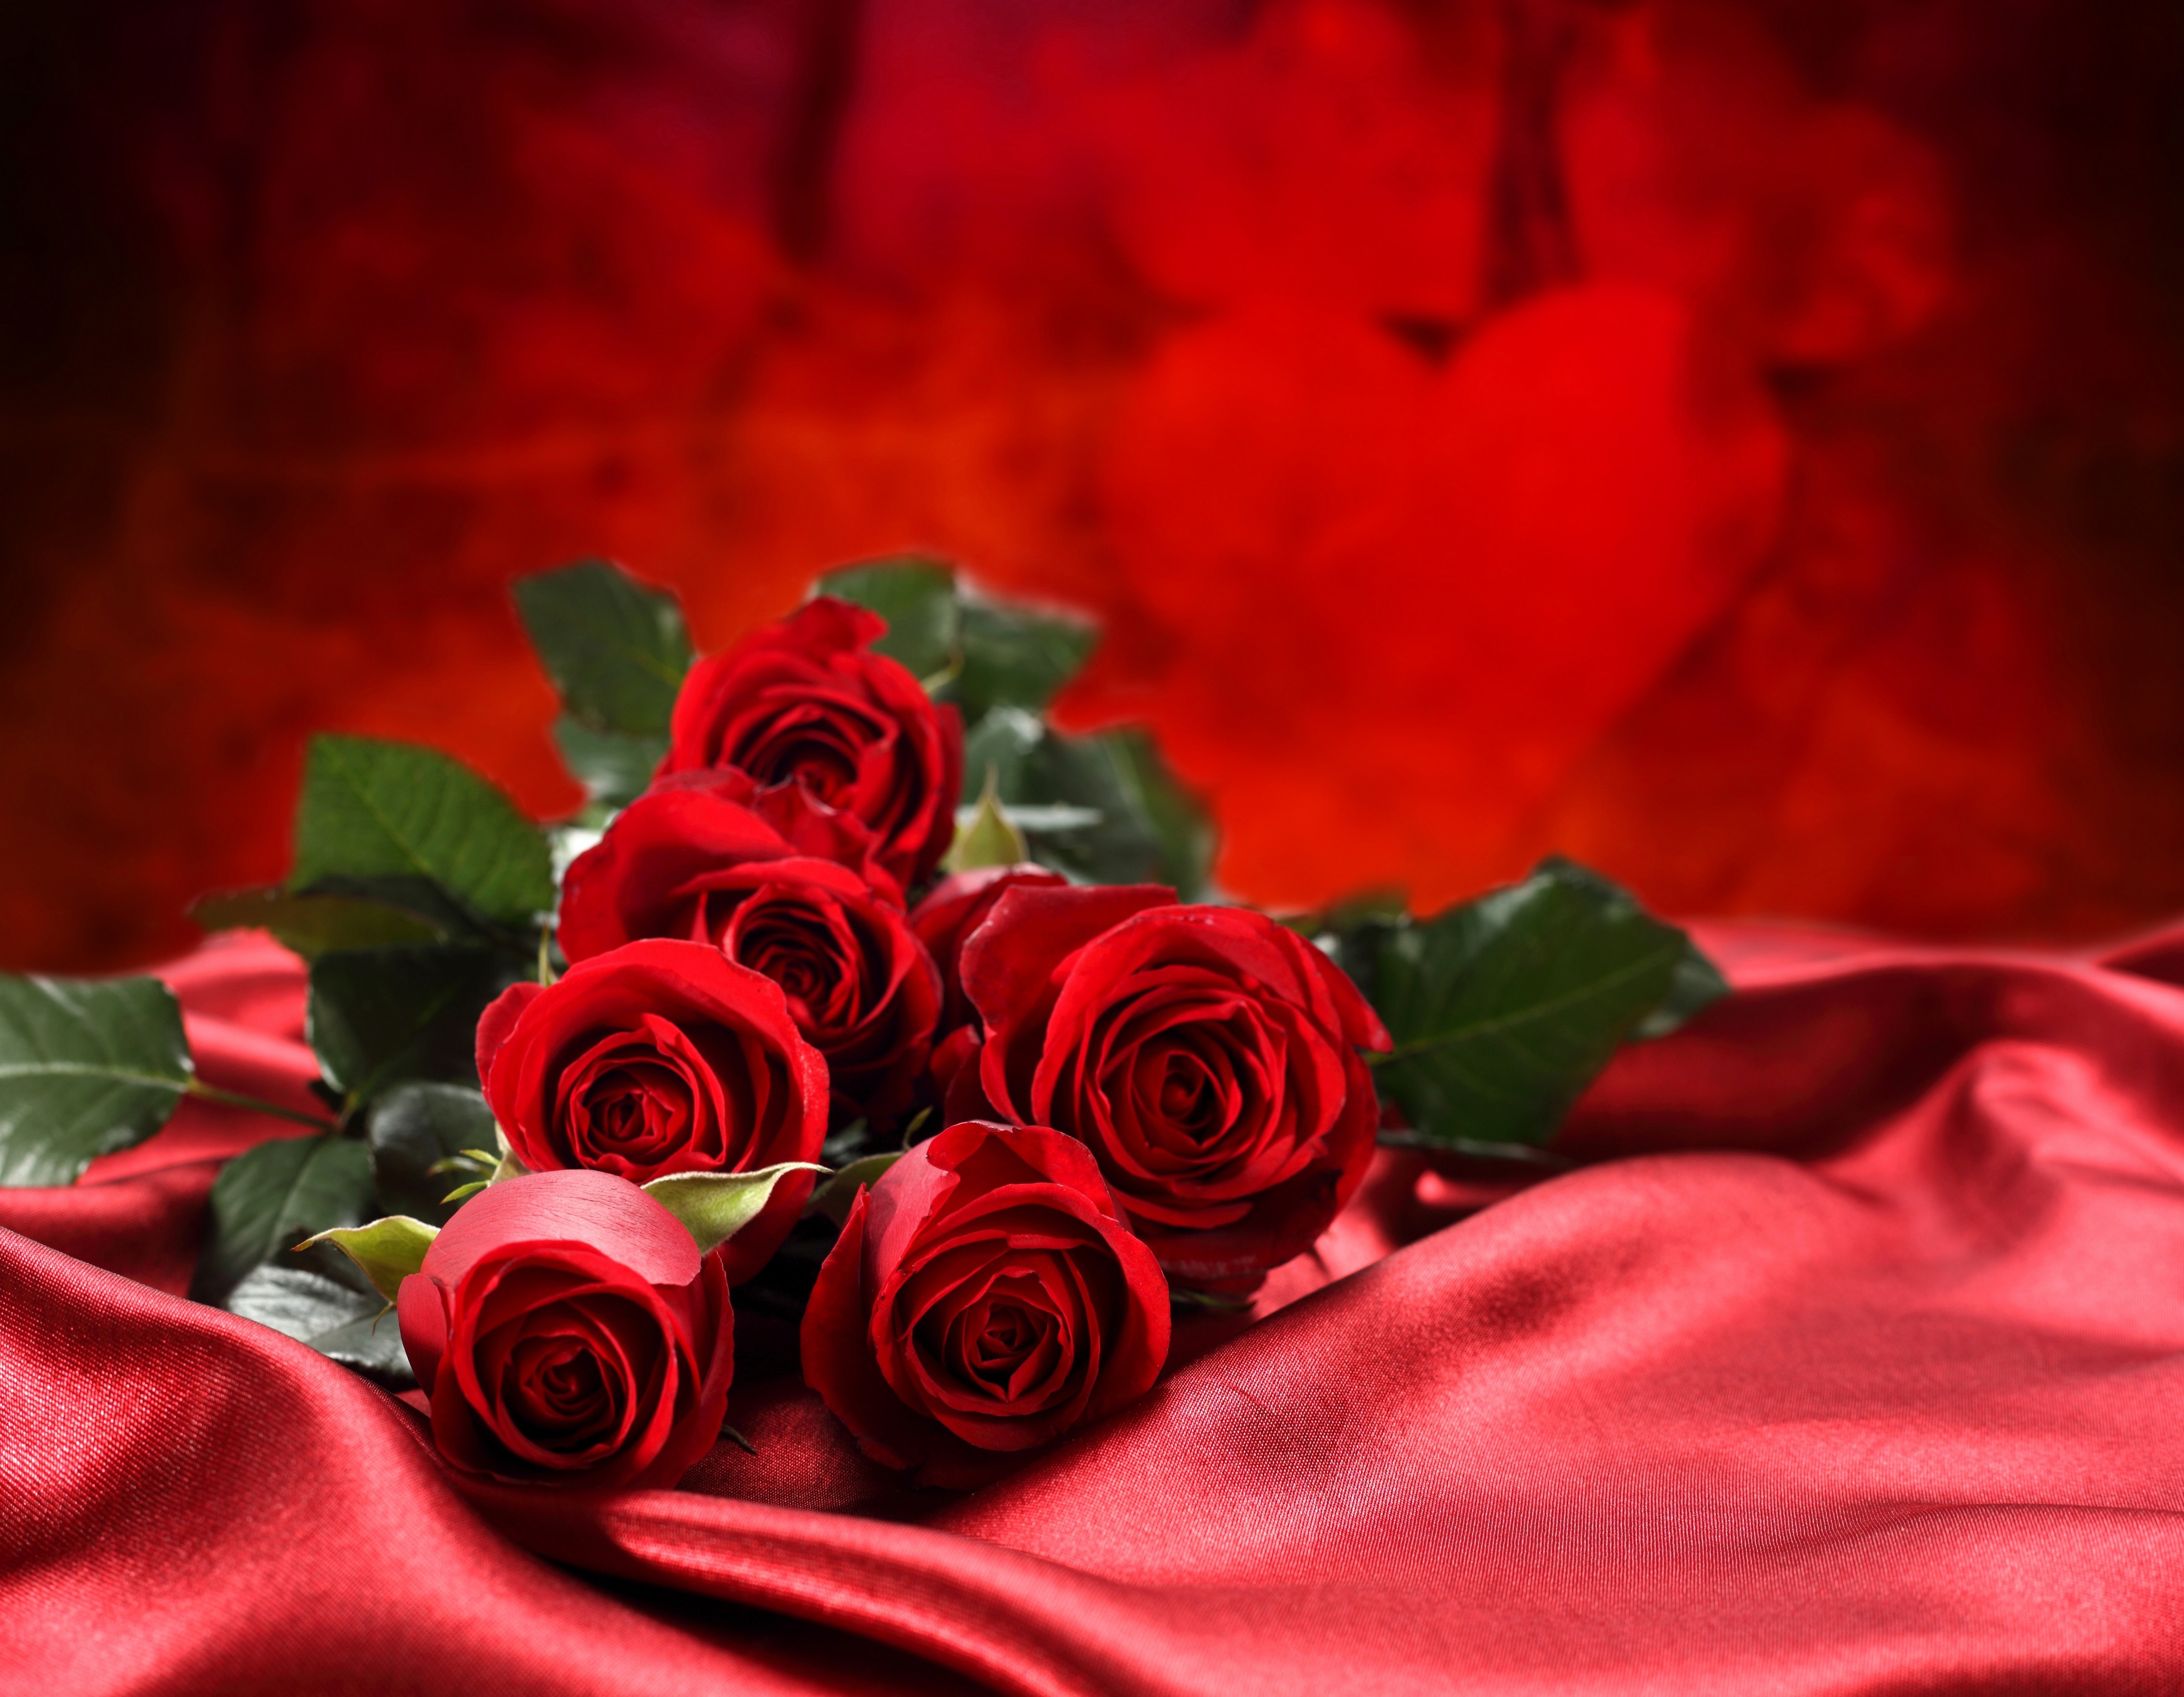 Love Red Rose Hd Wallpaper For Mobile